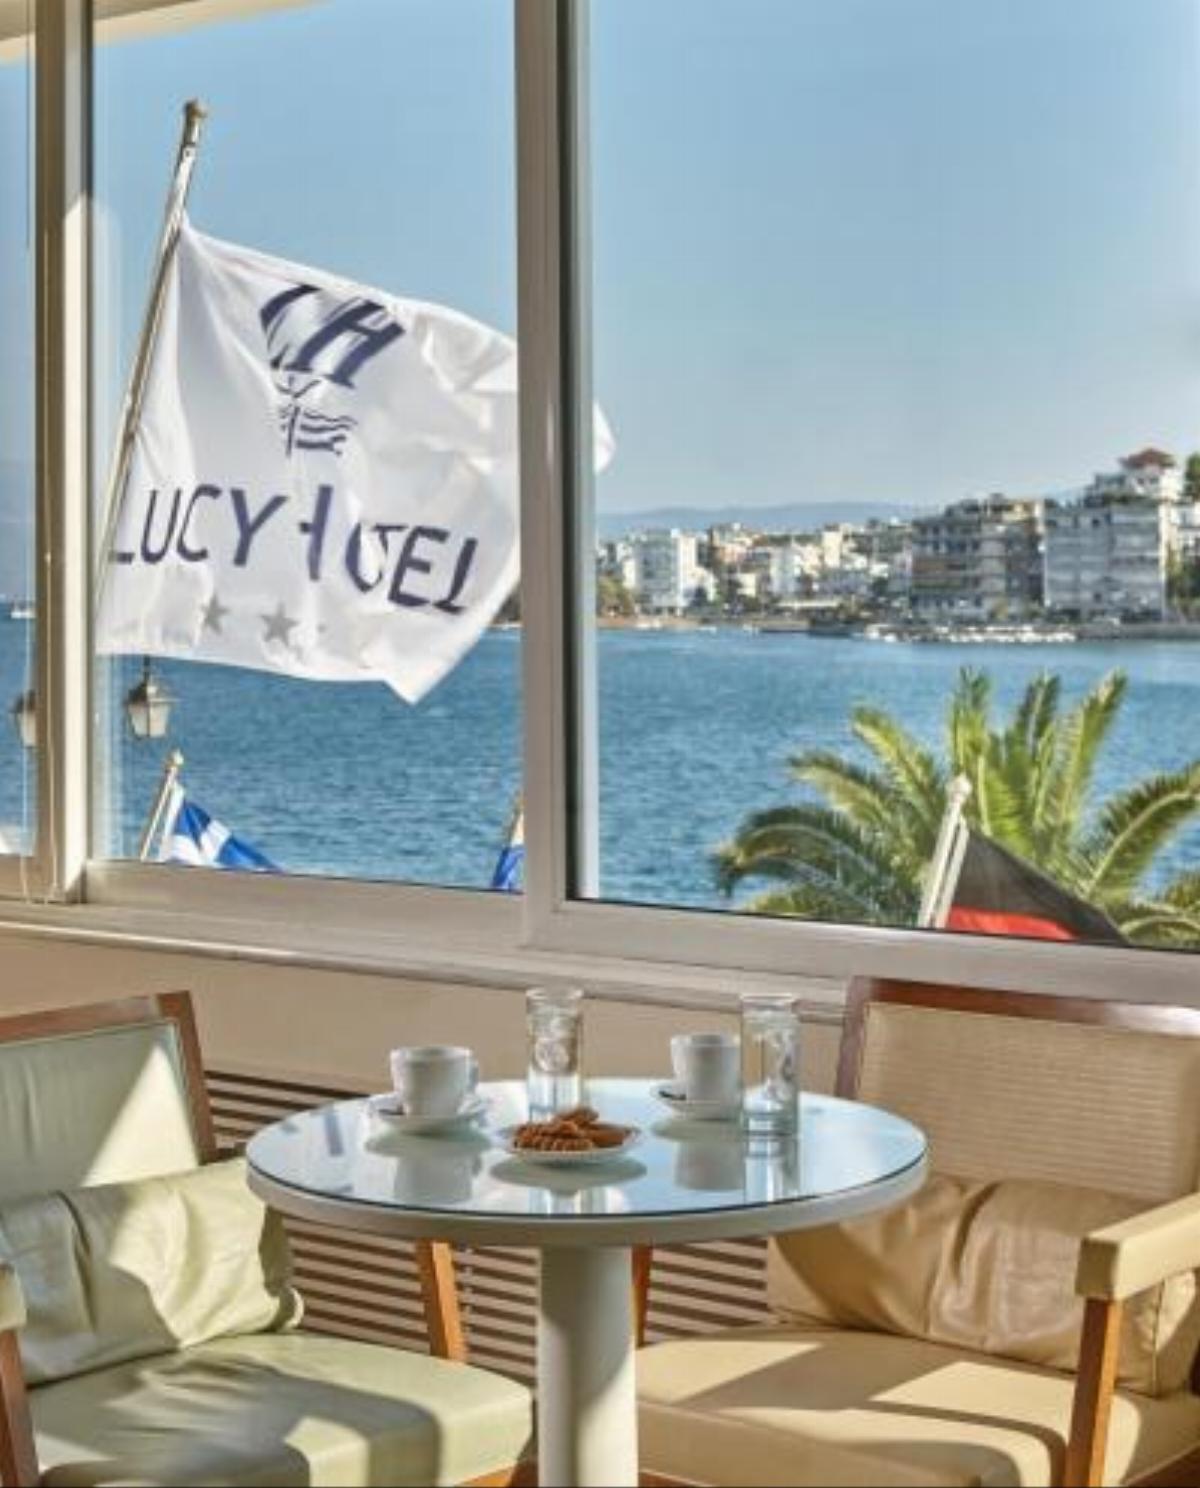 Lucy Hotel Hotel Chalkís Greece